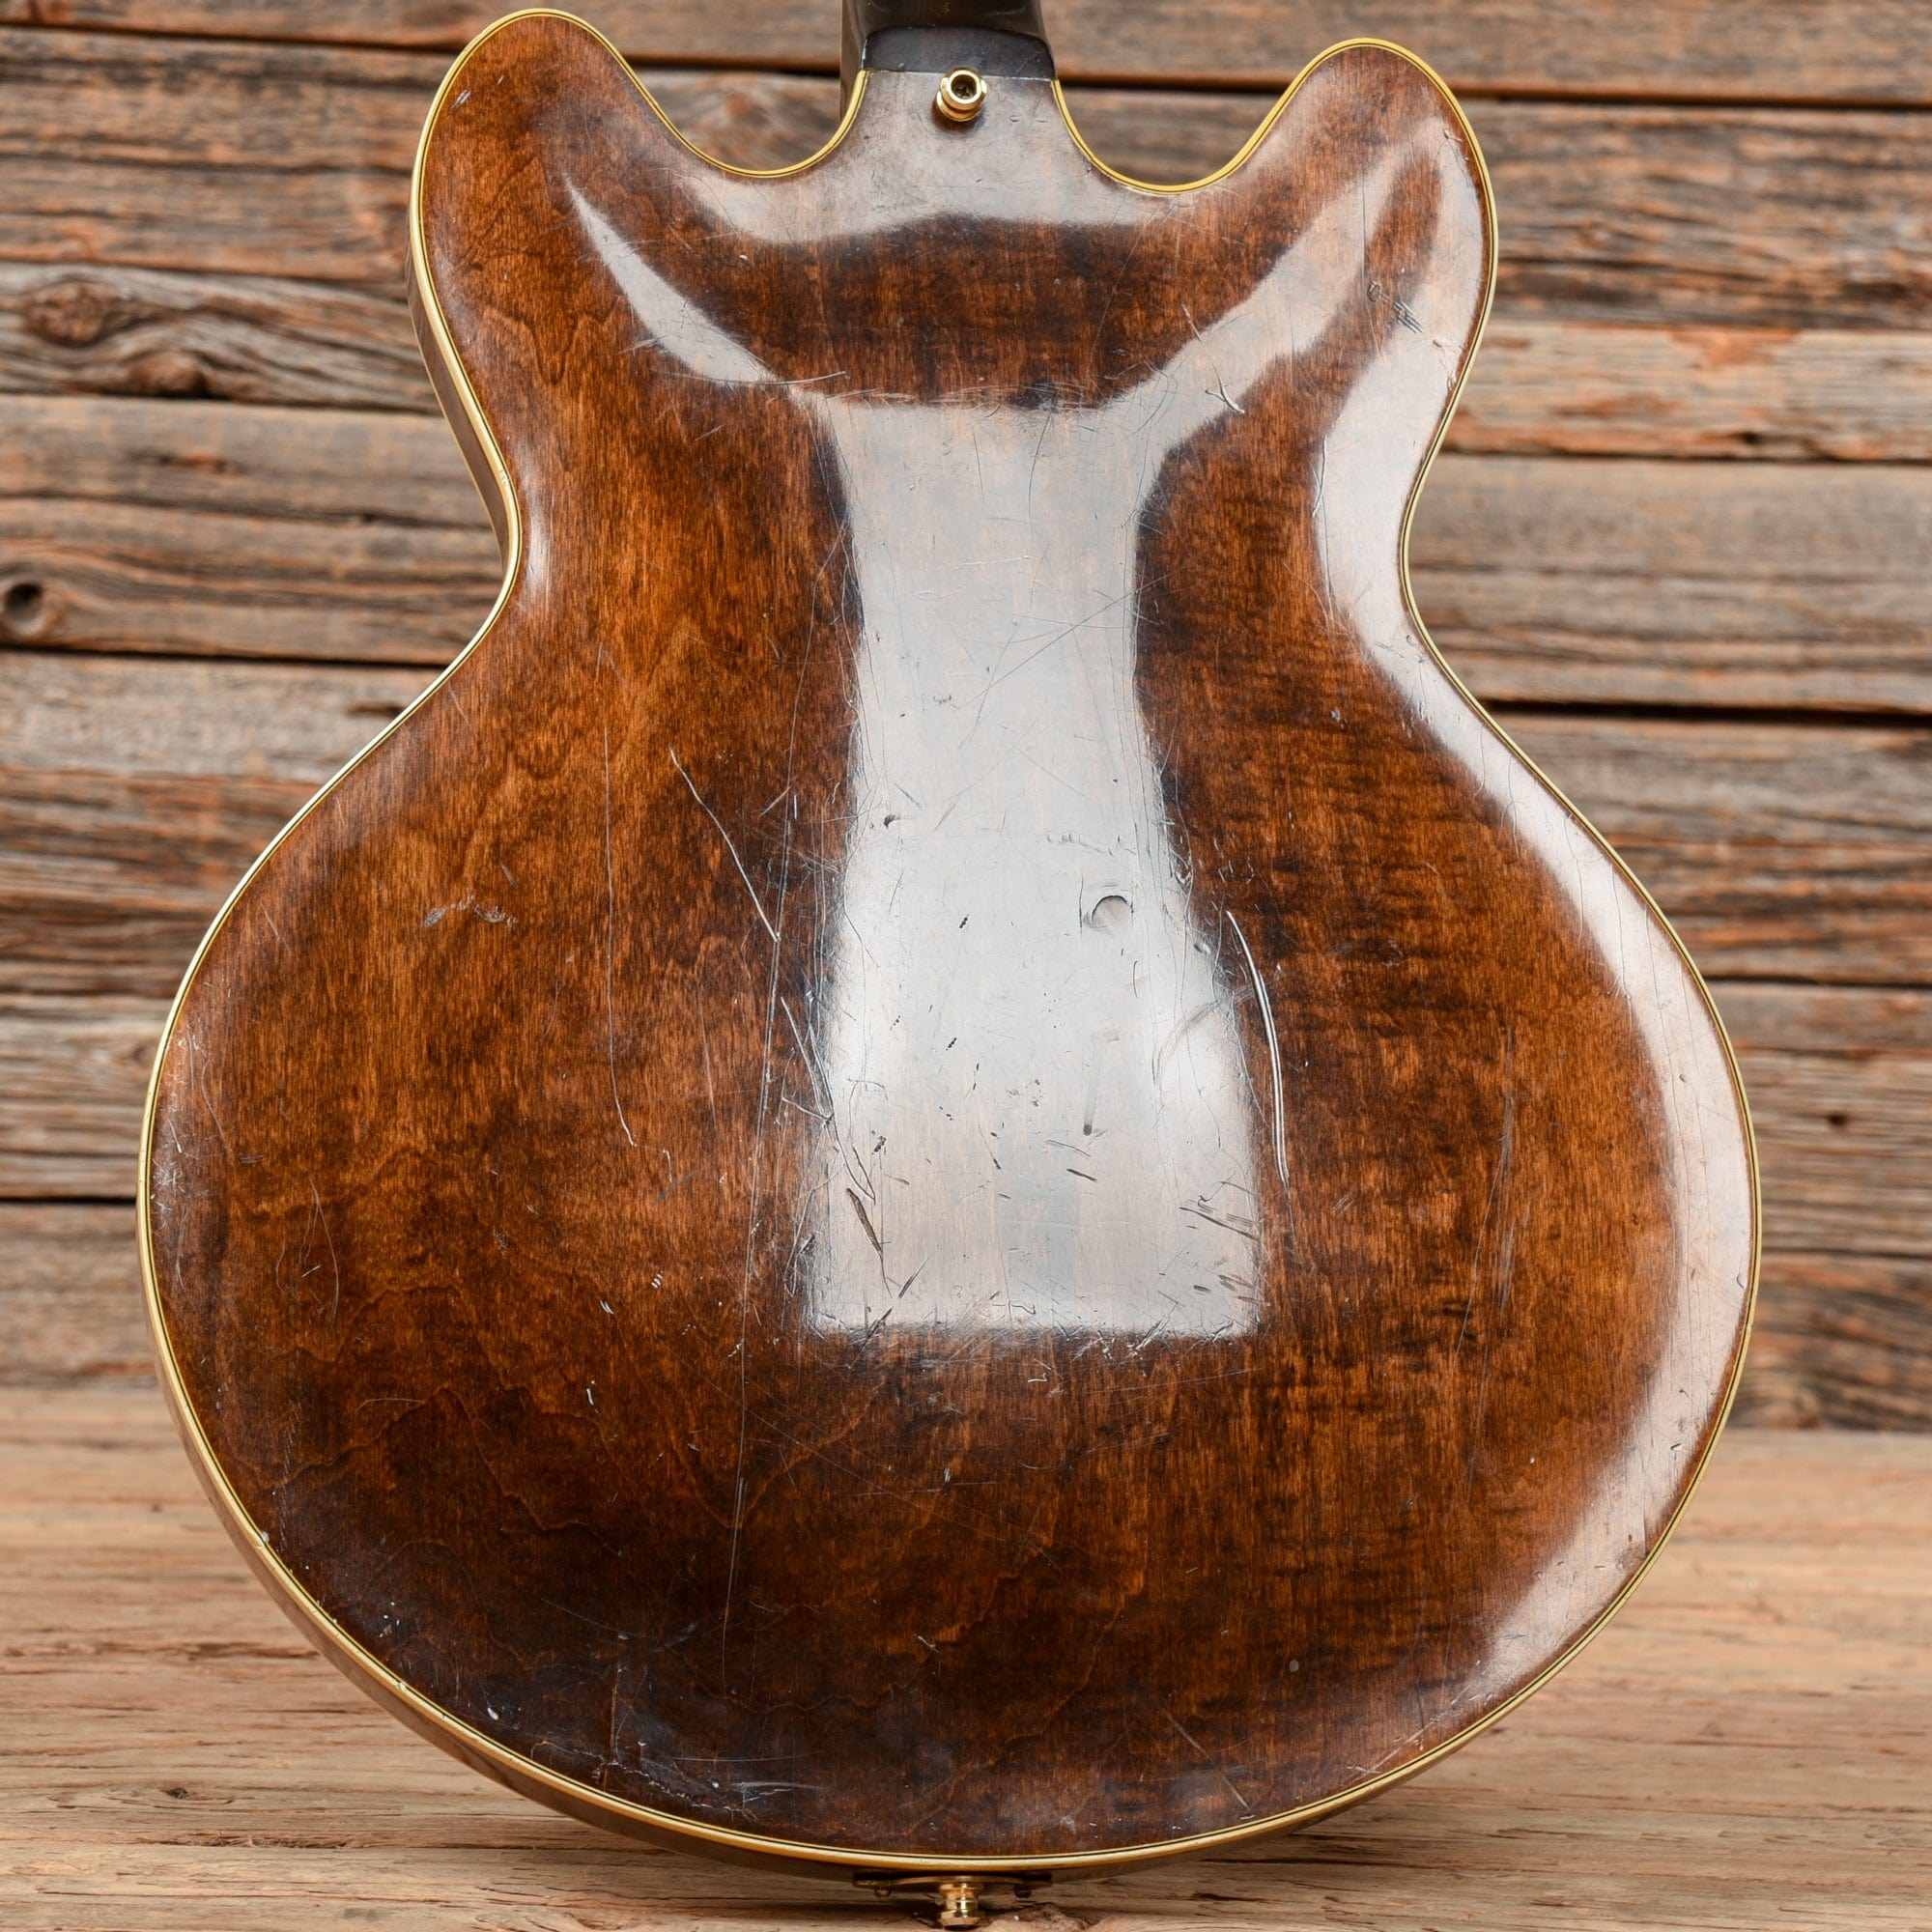 Gibson ES-345 Walnut 1970s Electric Guitars / Semi-Hollow